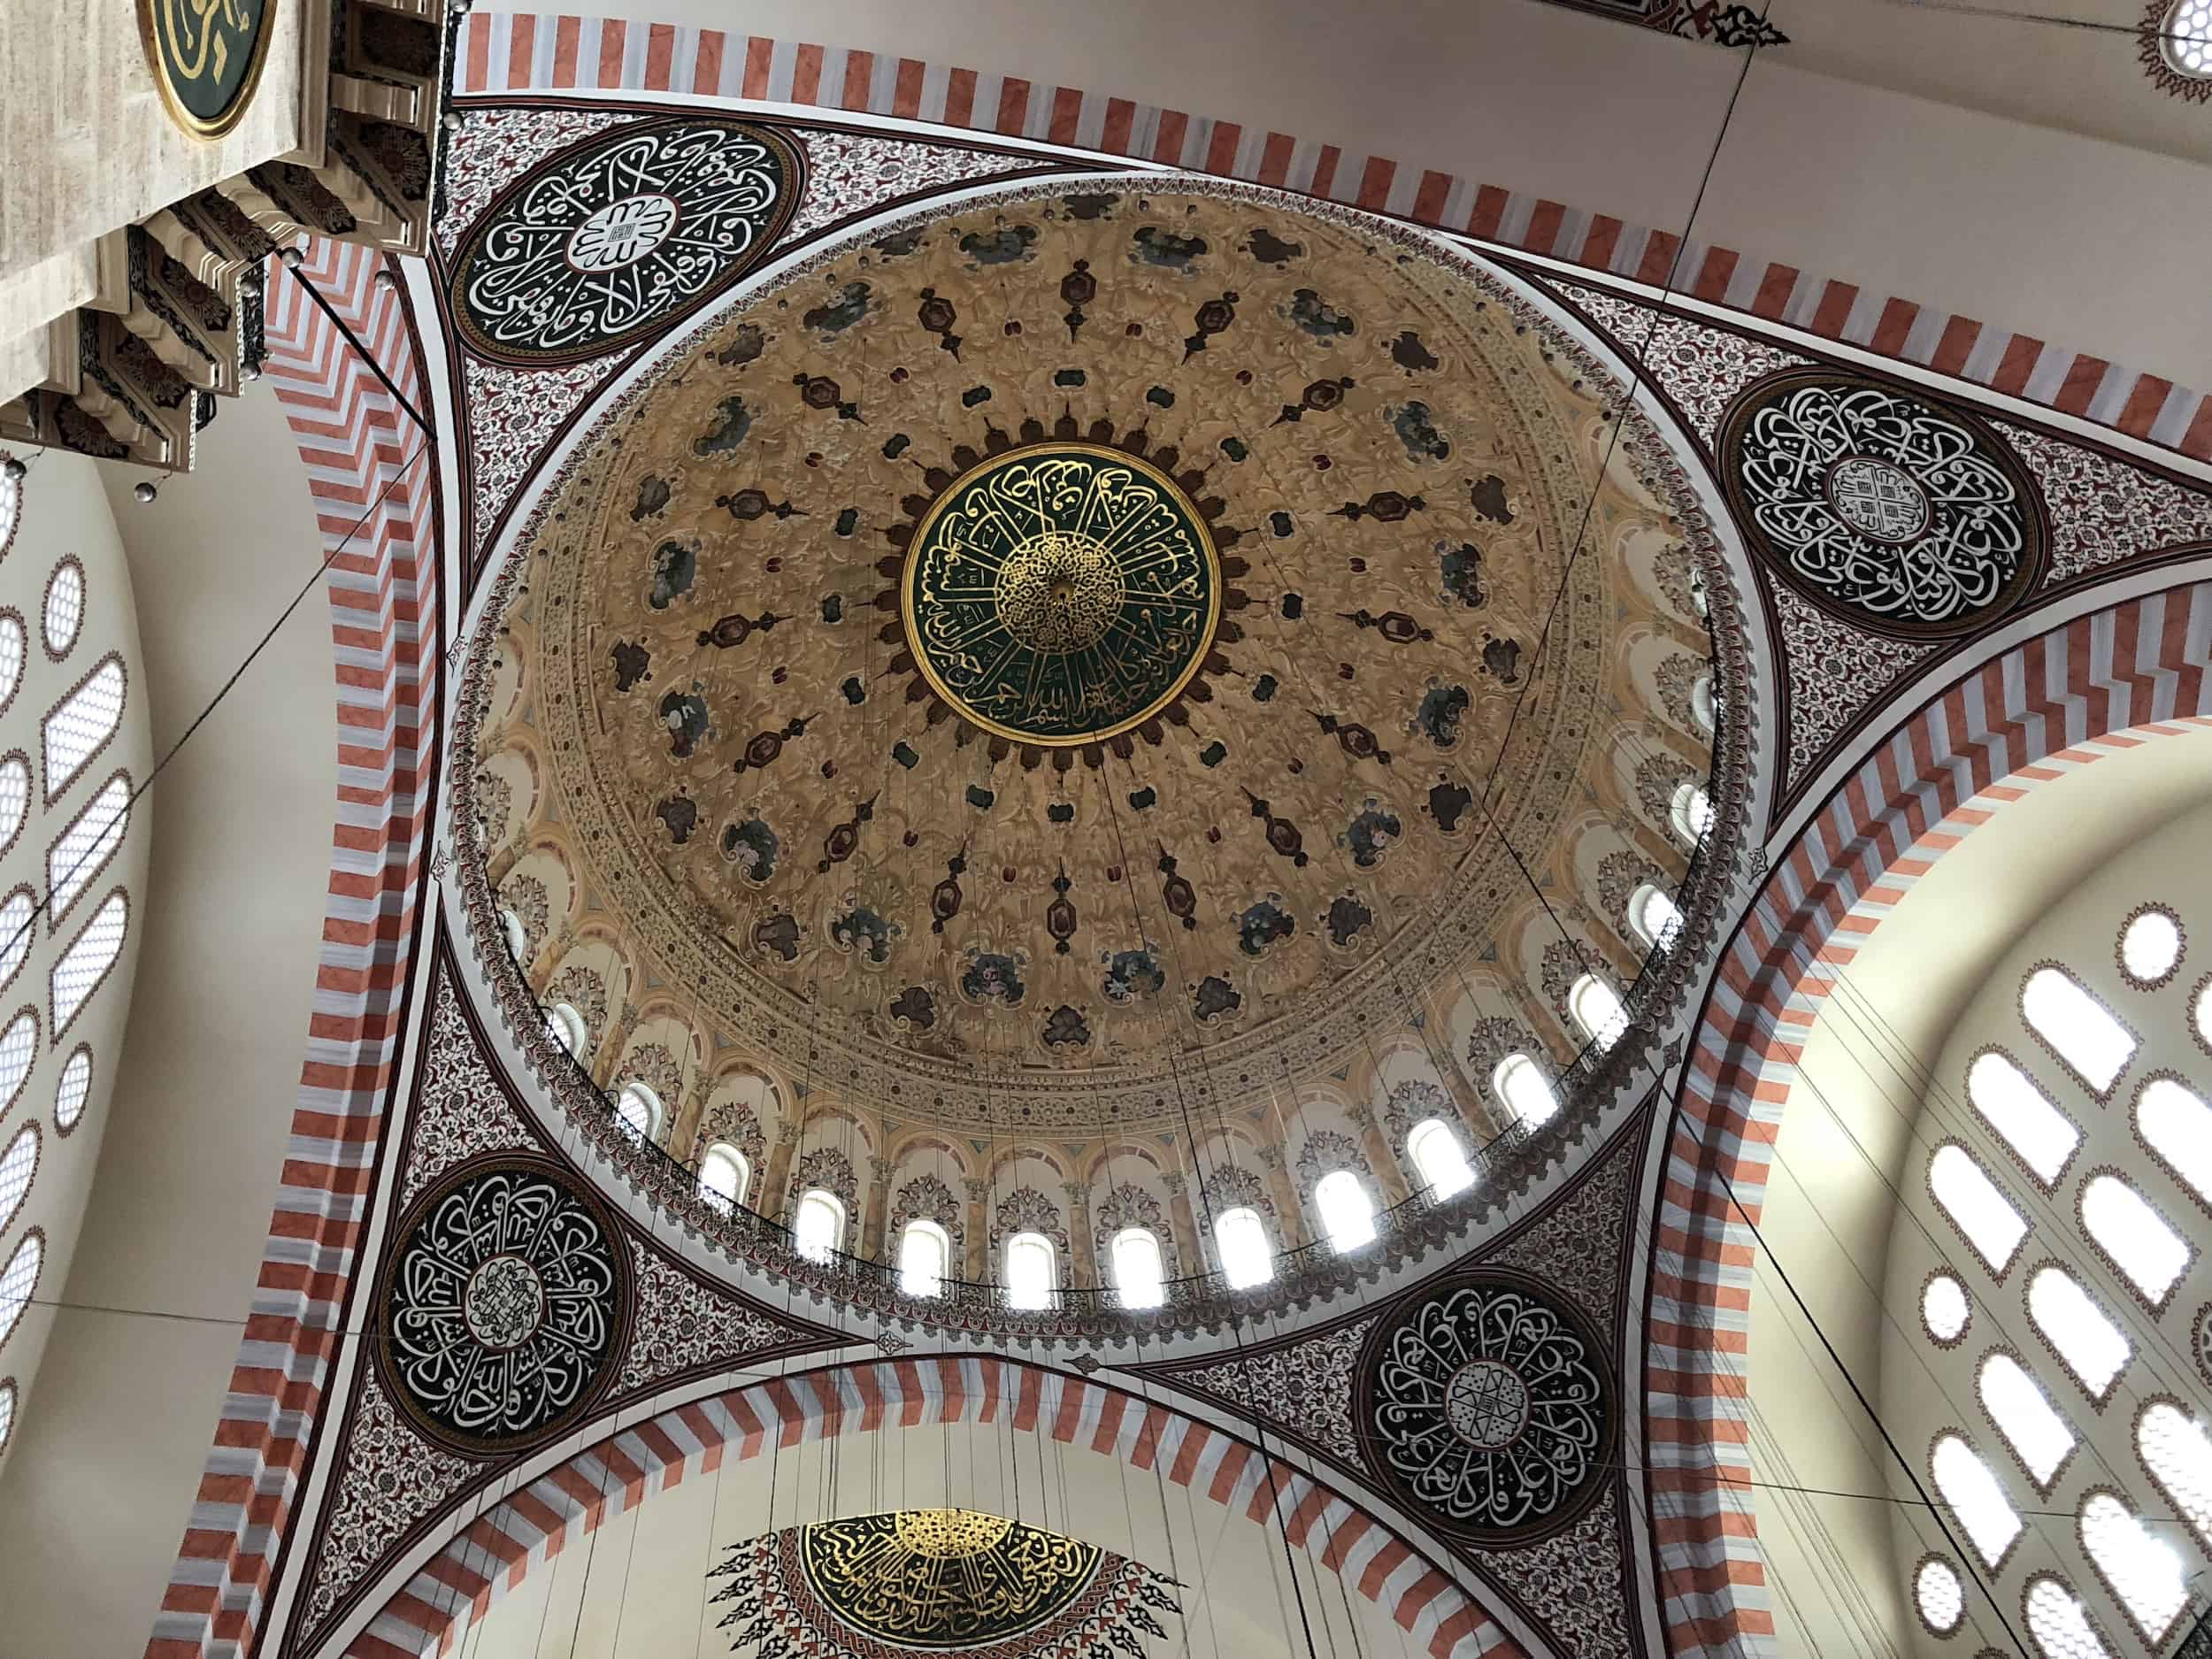 Dome of the Süleymaniye Mosque in Istanbul, Turkey